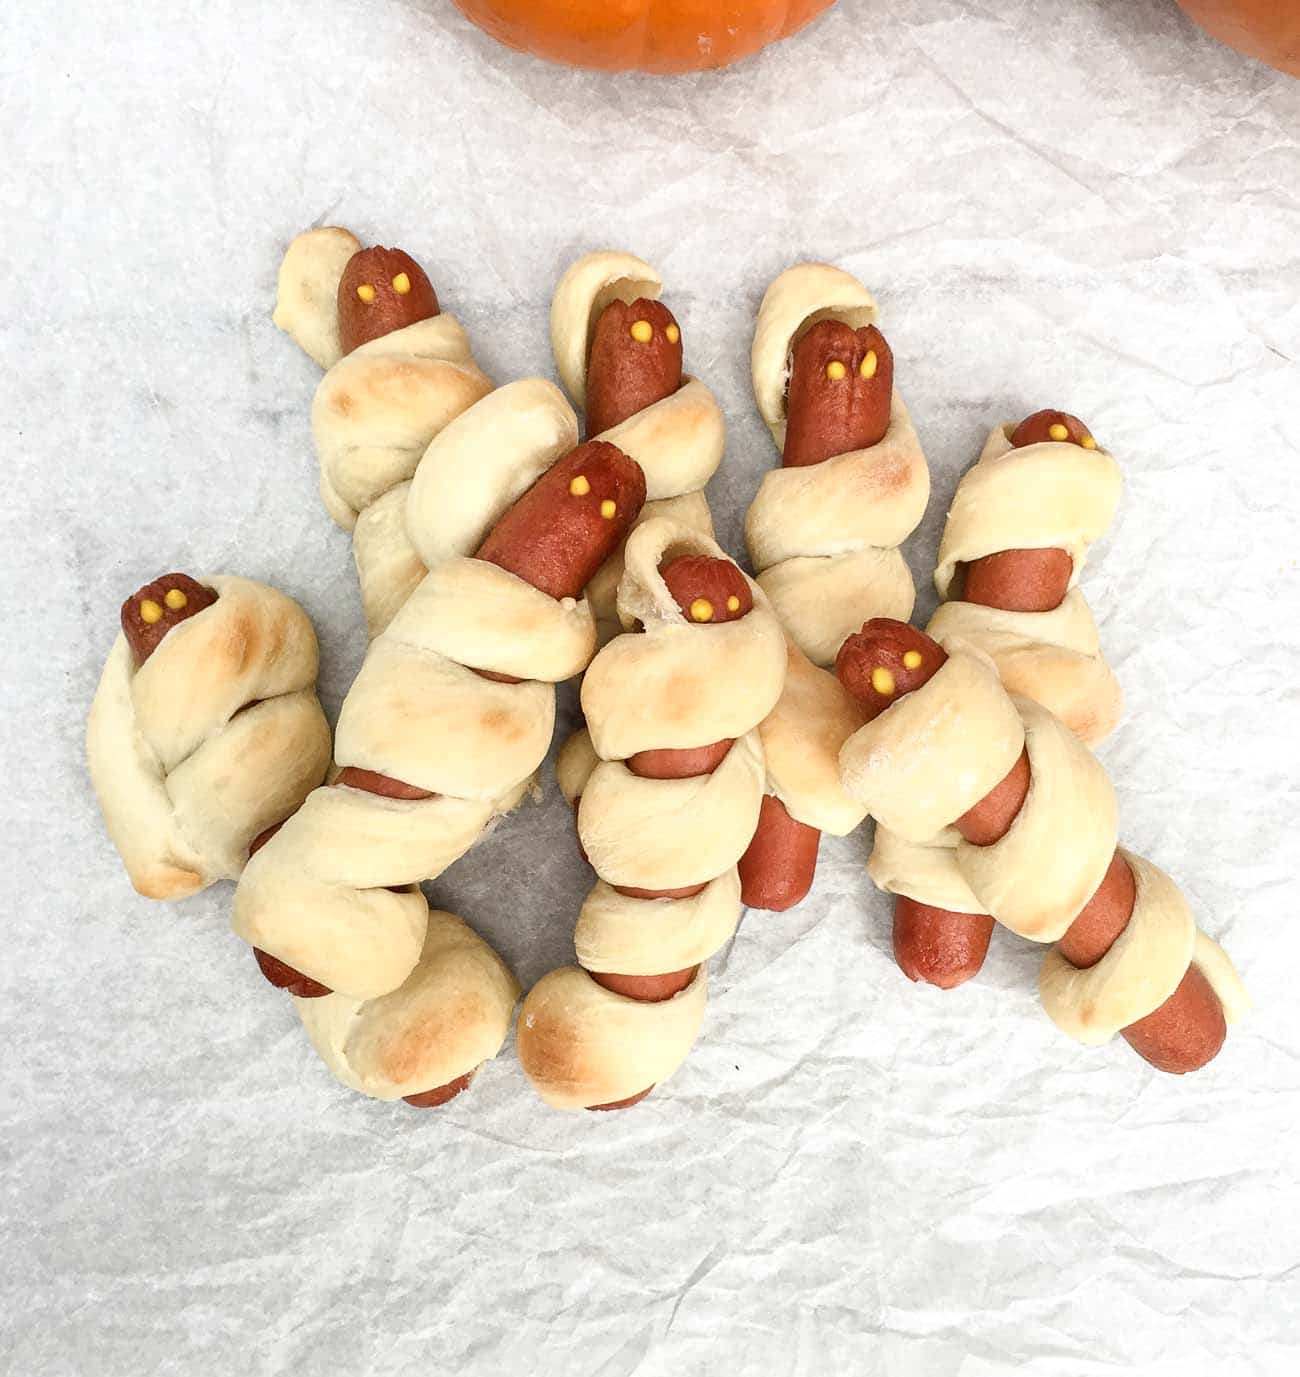 Hot dog mummies in a pile